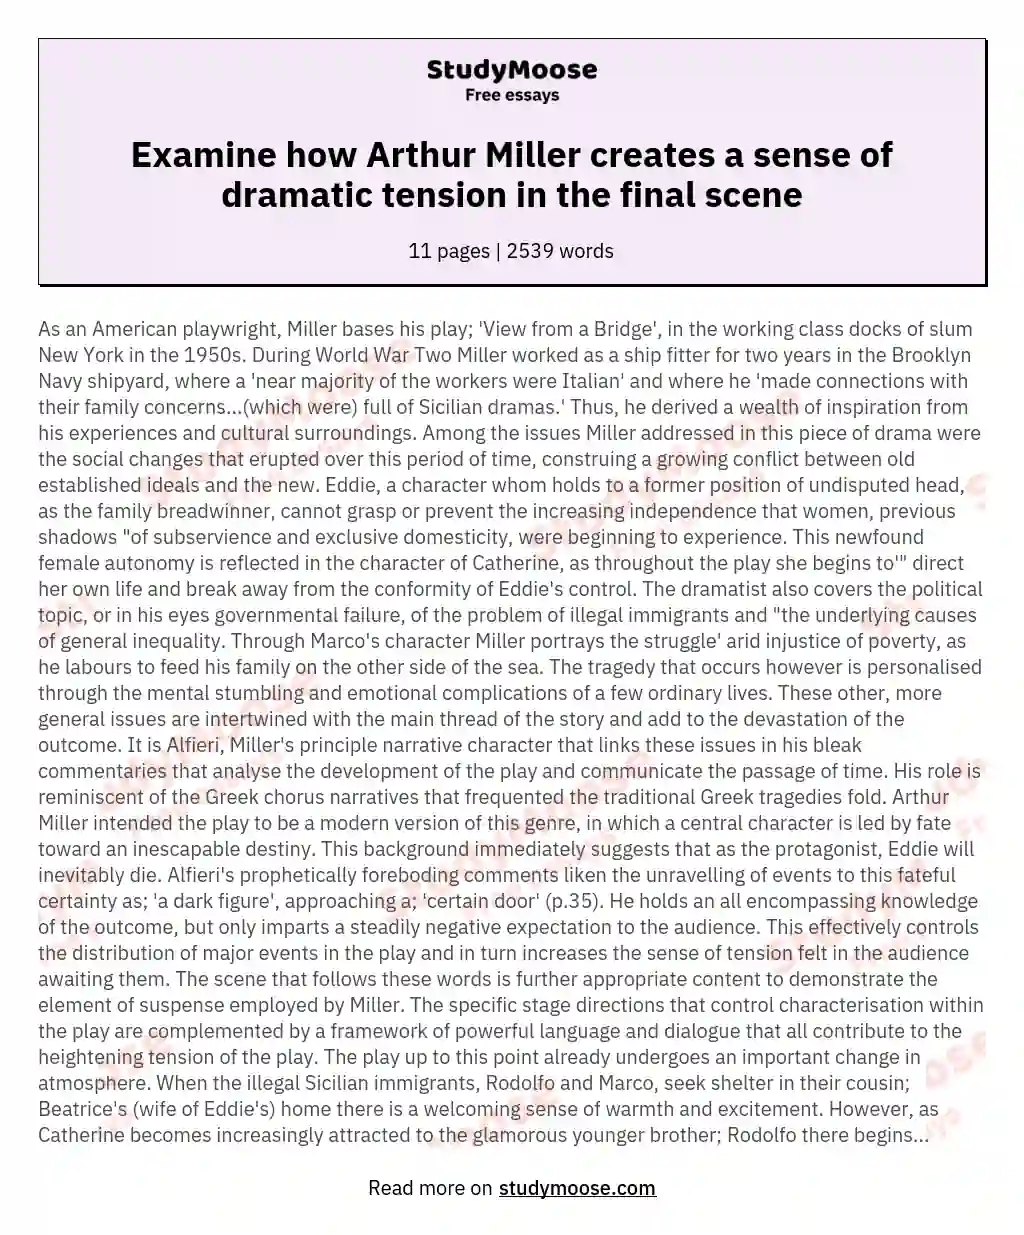 Examine how Arthur Miller creates a sense of dramatic tension in the final scene essay